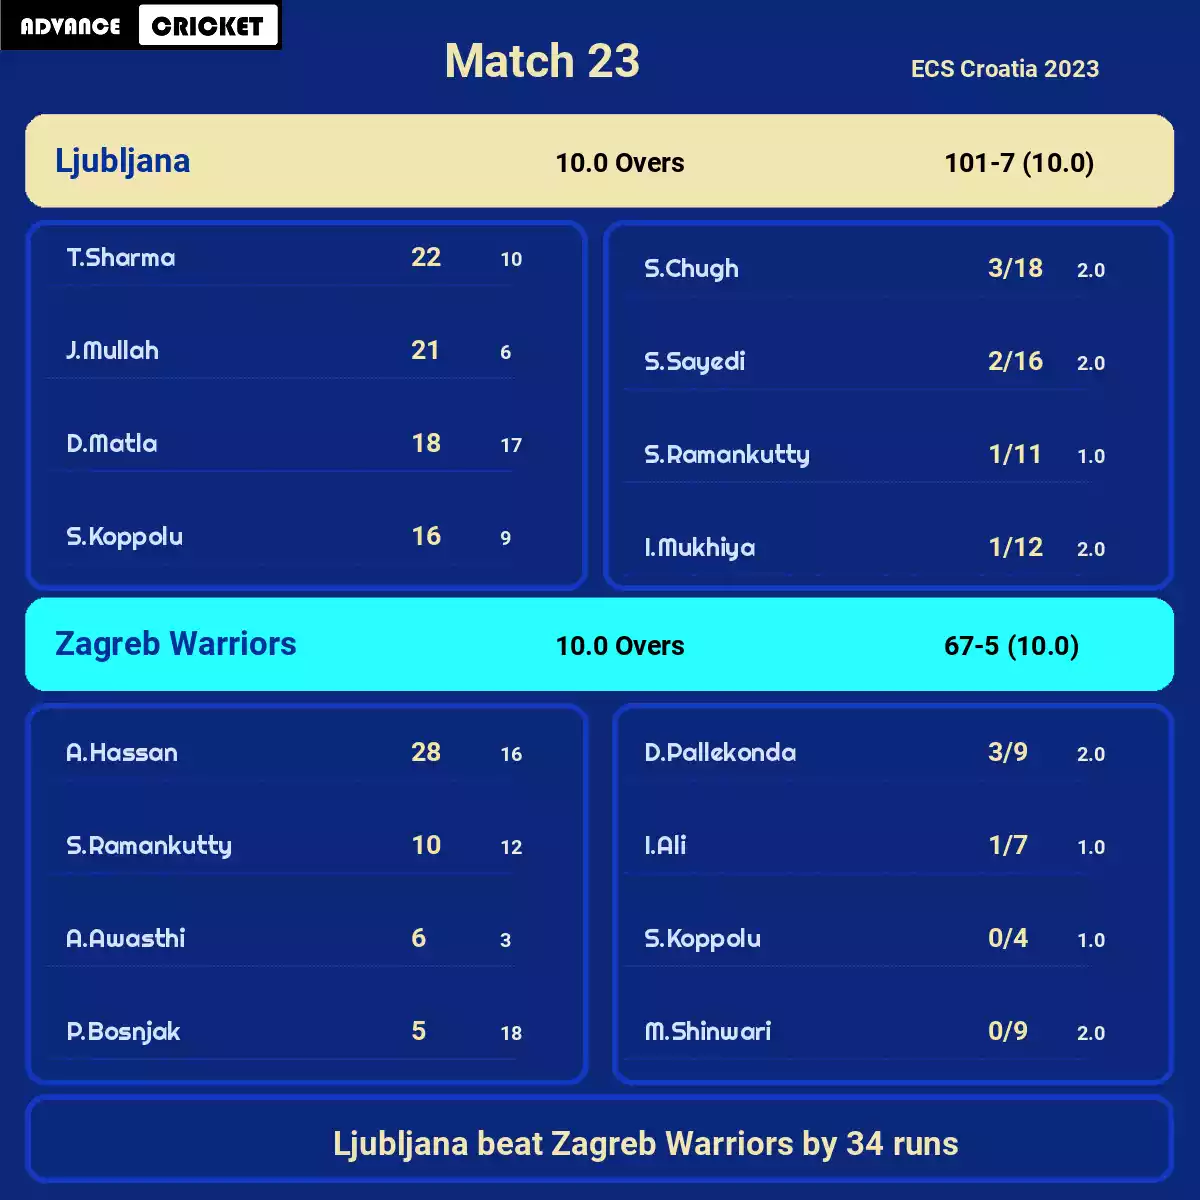 ZW vs LJU Match 23 ECS Croatia 2023